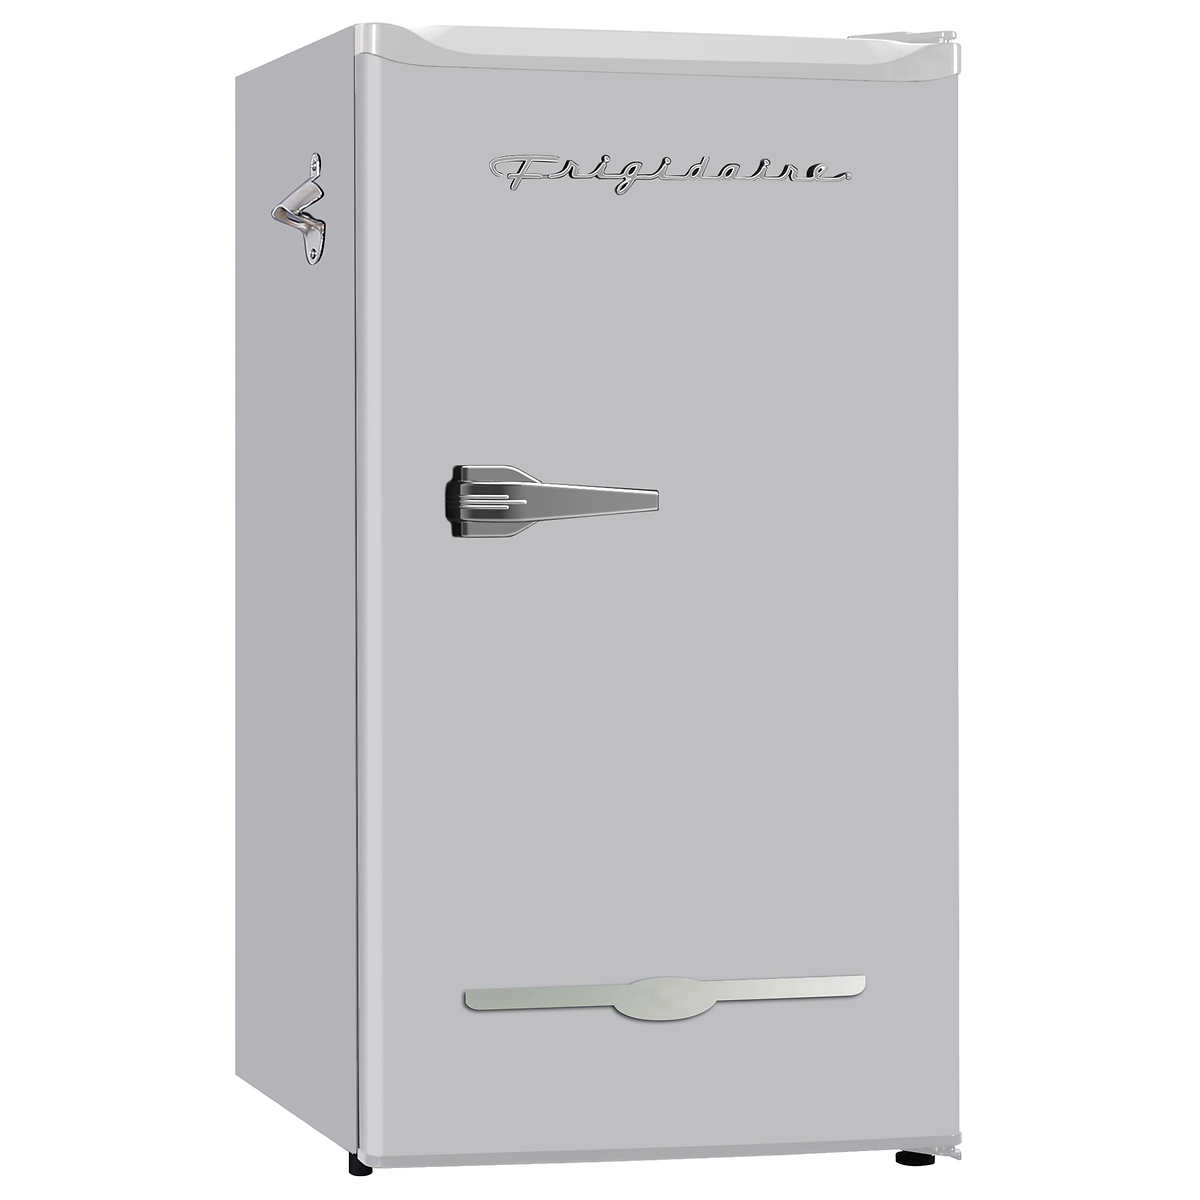 Ft Mini Fridge Compact Refrigerators Small Freezer Office New Red Retro 3.2 Cu 